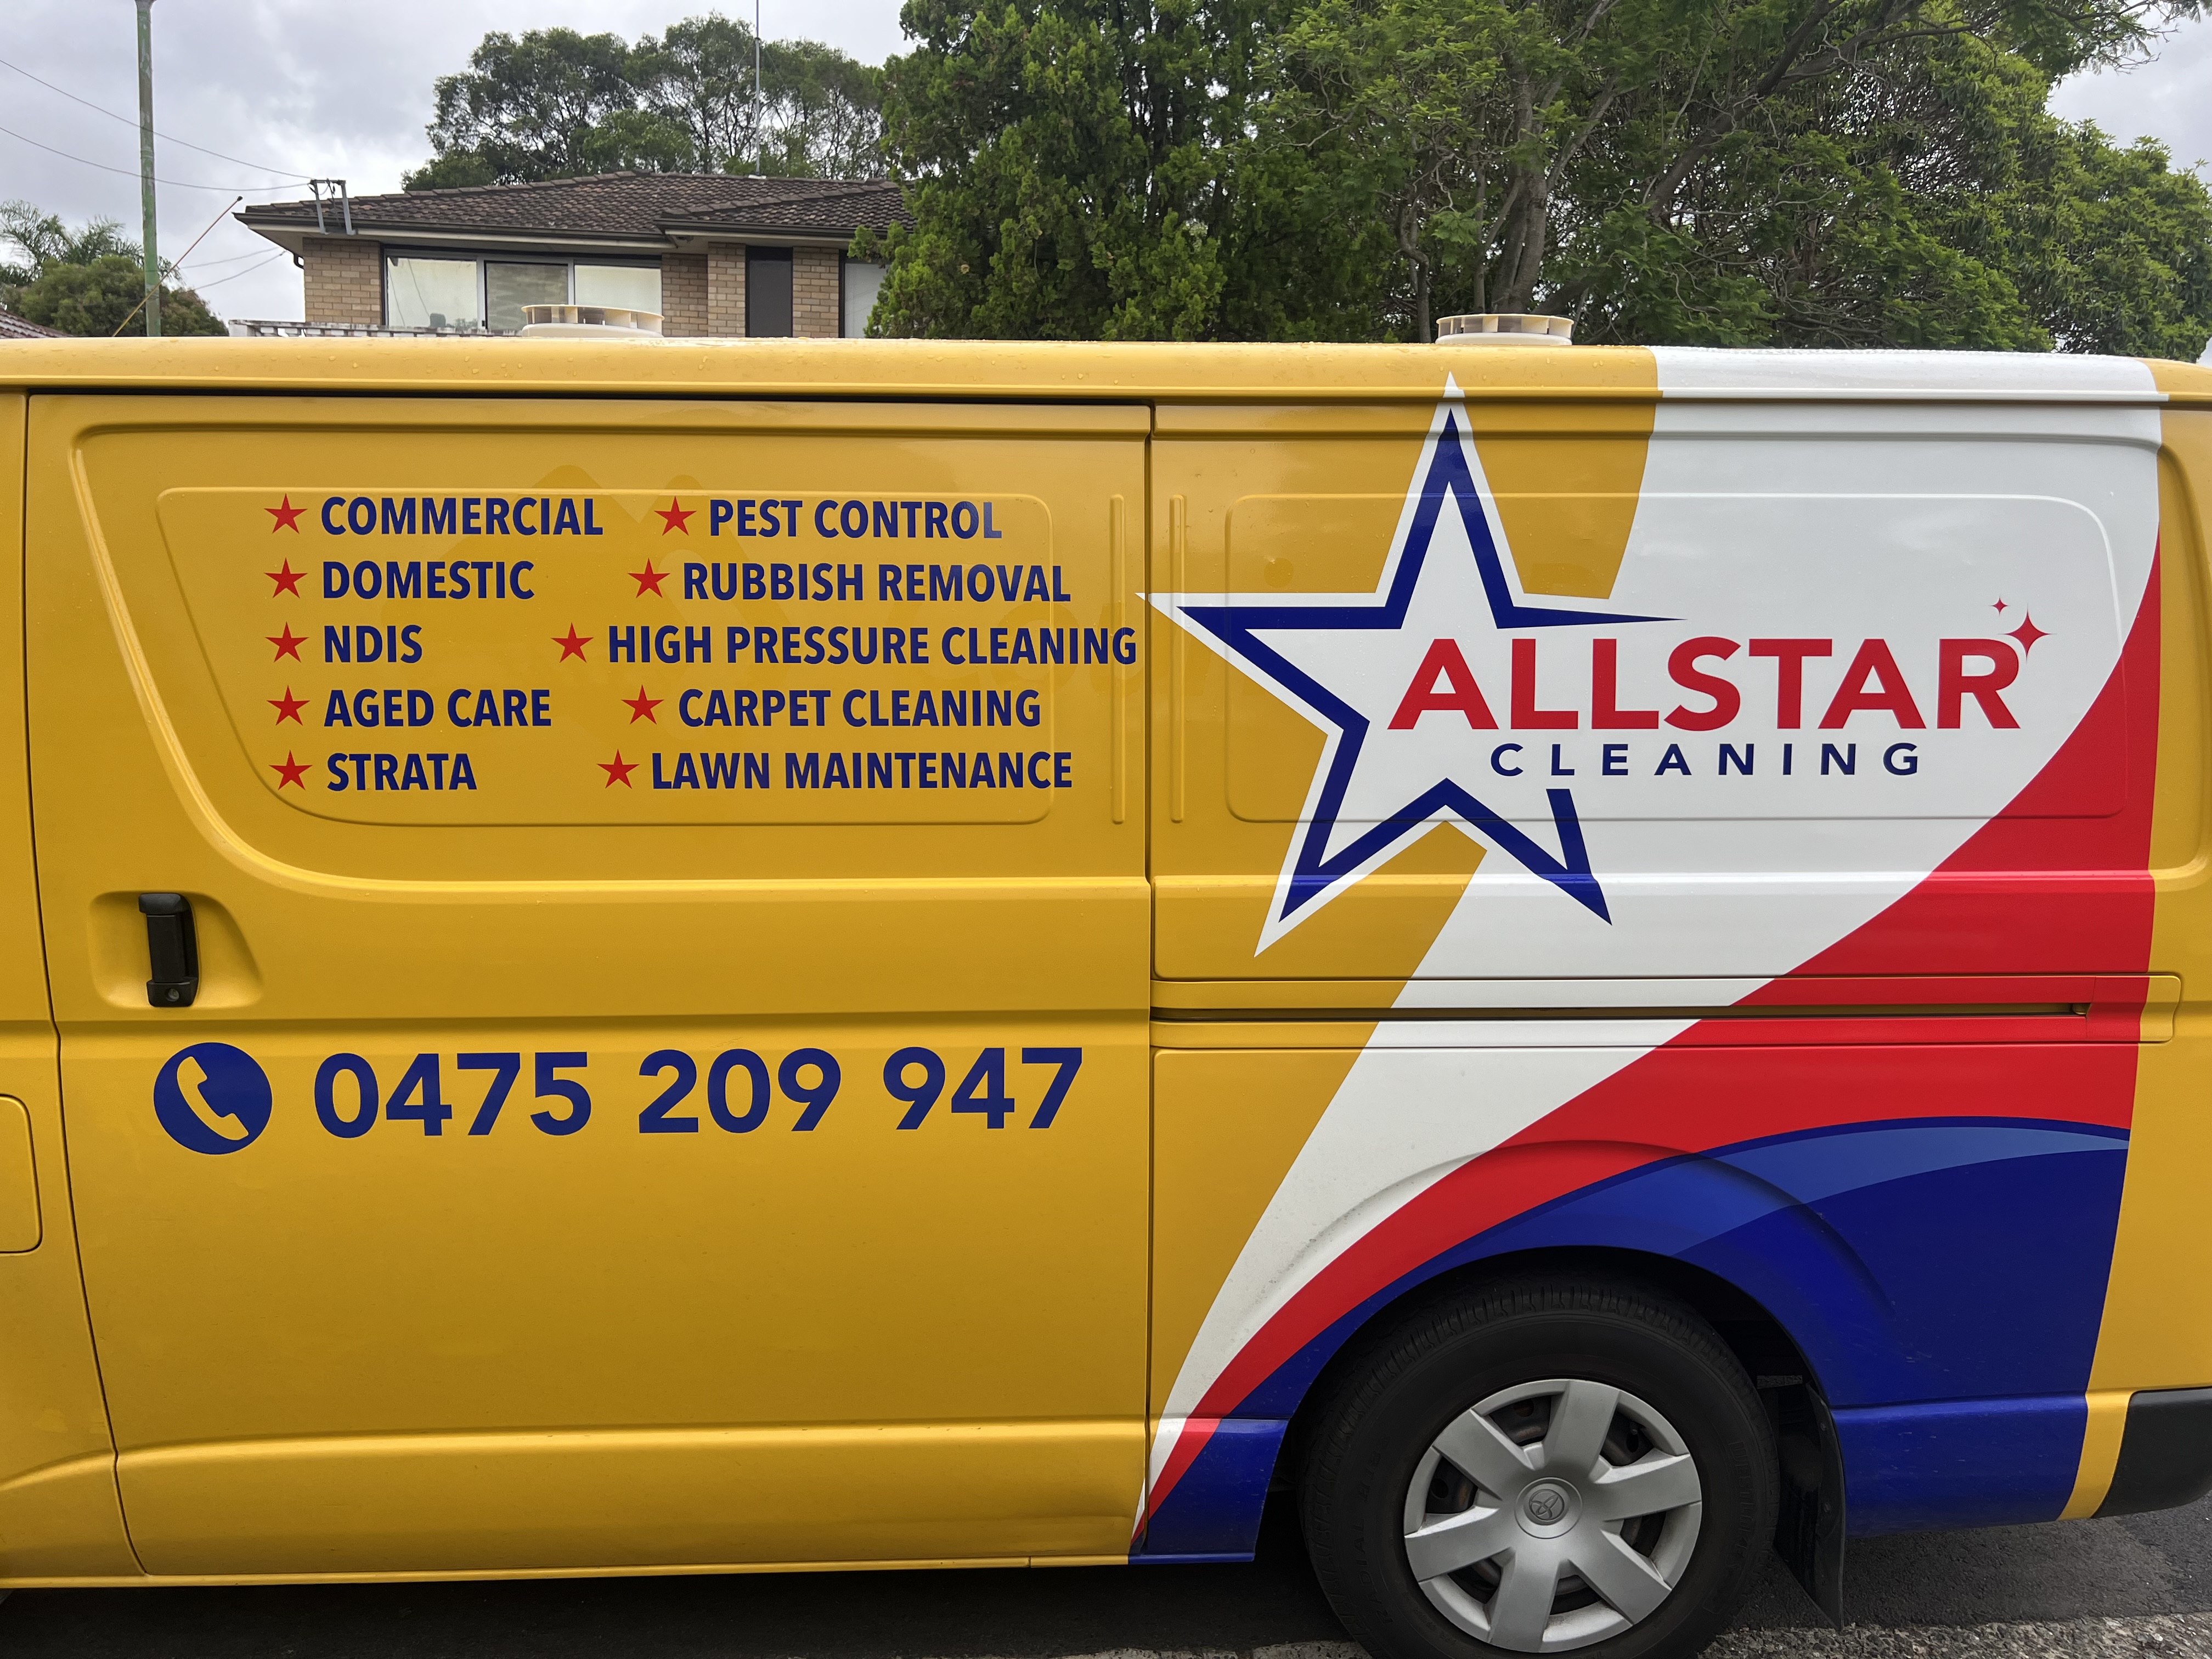 Allstar Cleaning Co Pty Ltd